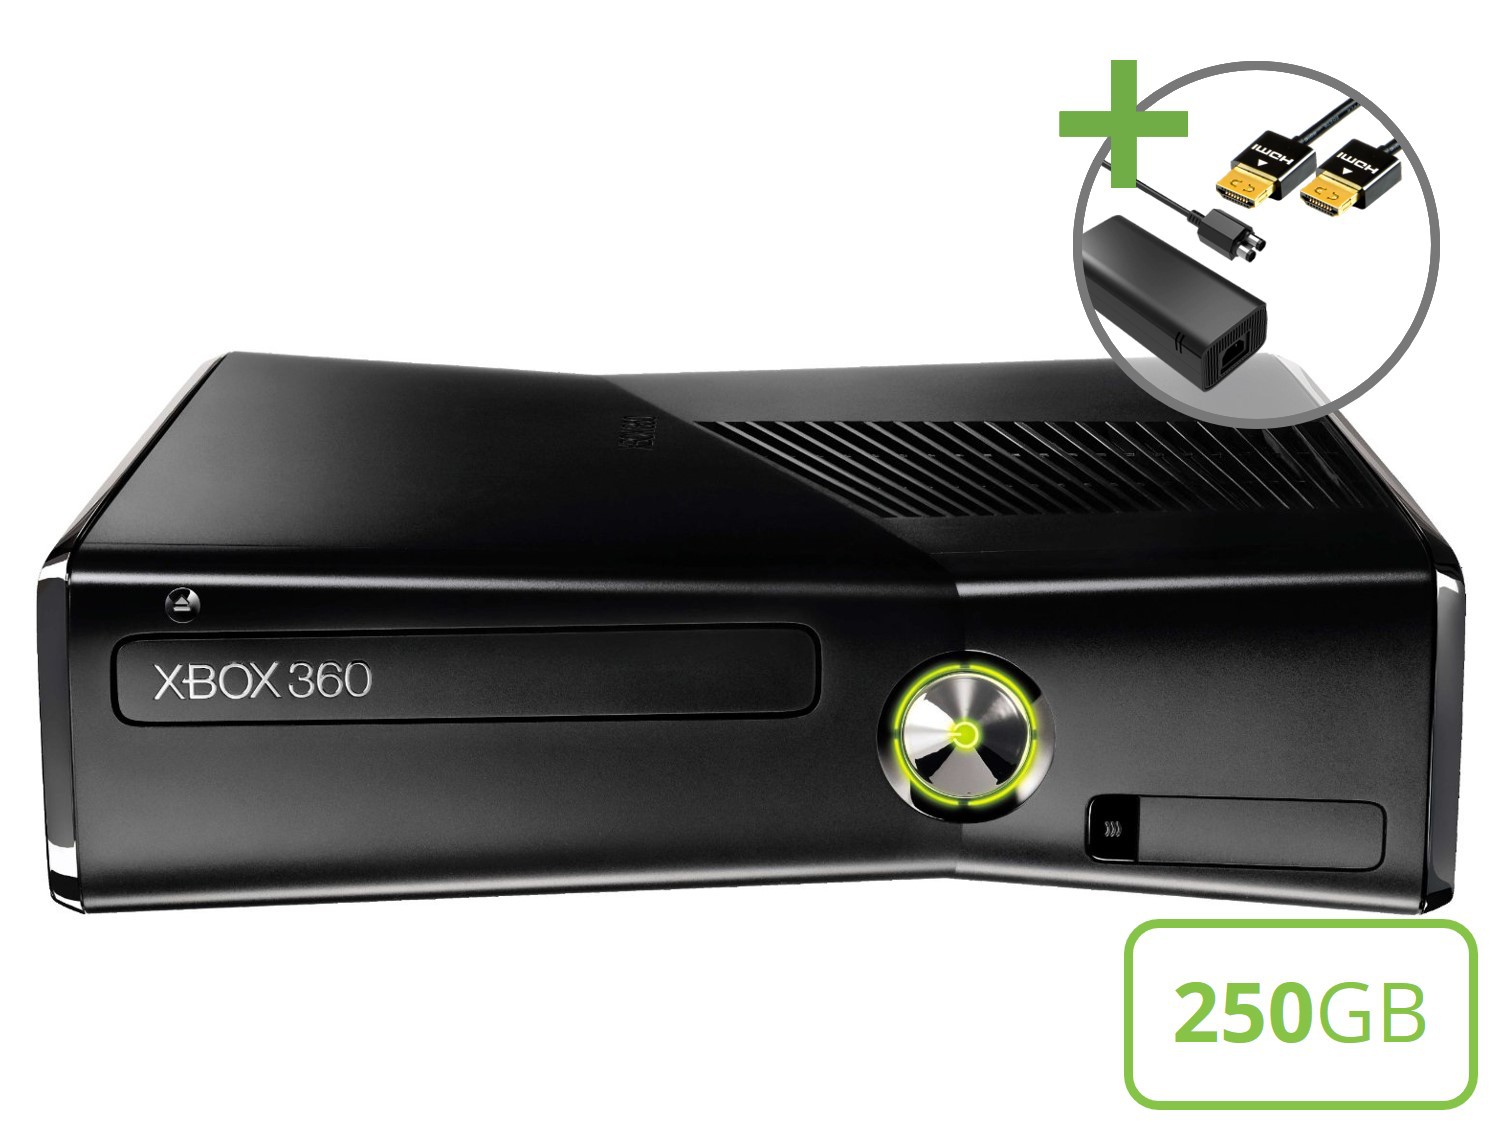 Microsoft Xbox 360 Slim Starter Pack - Forza 3 and Crisis 2 Edition - Xbox 360 Hardware - 2